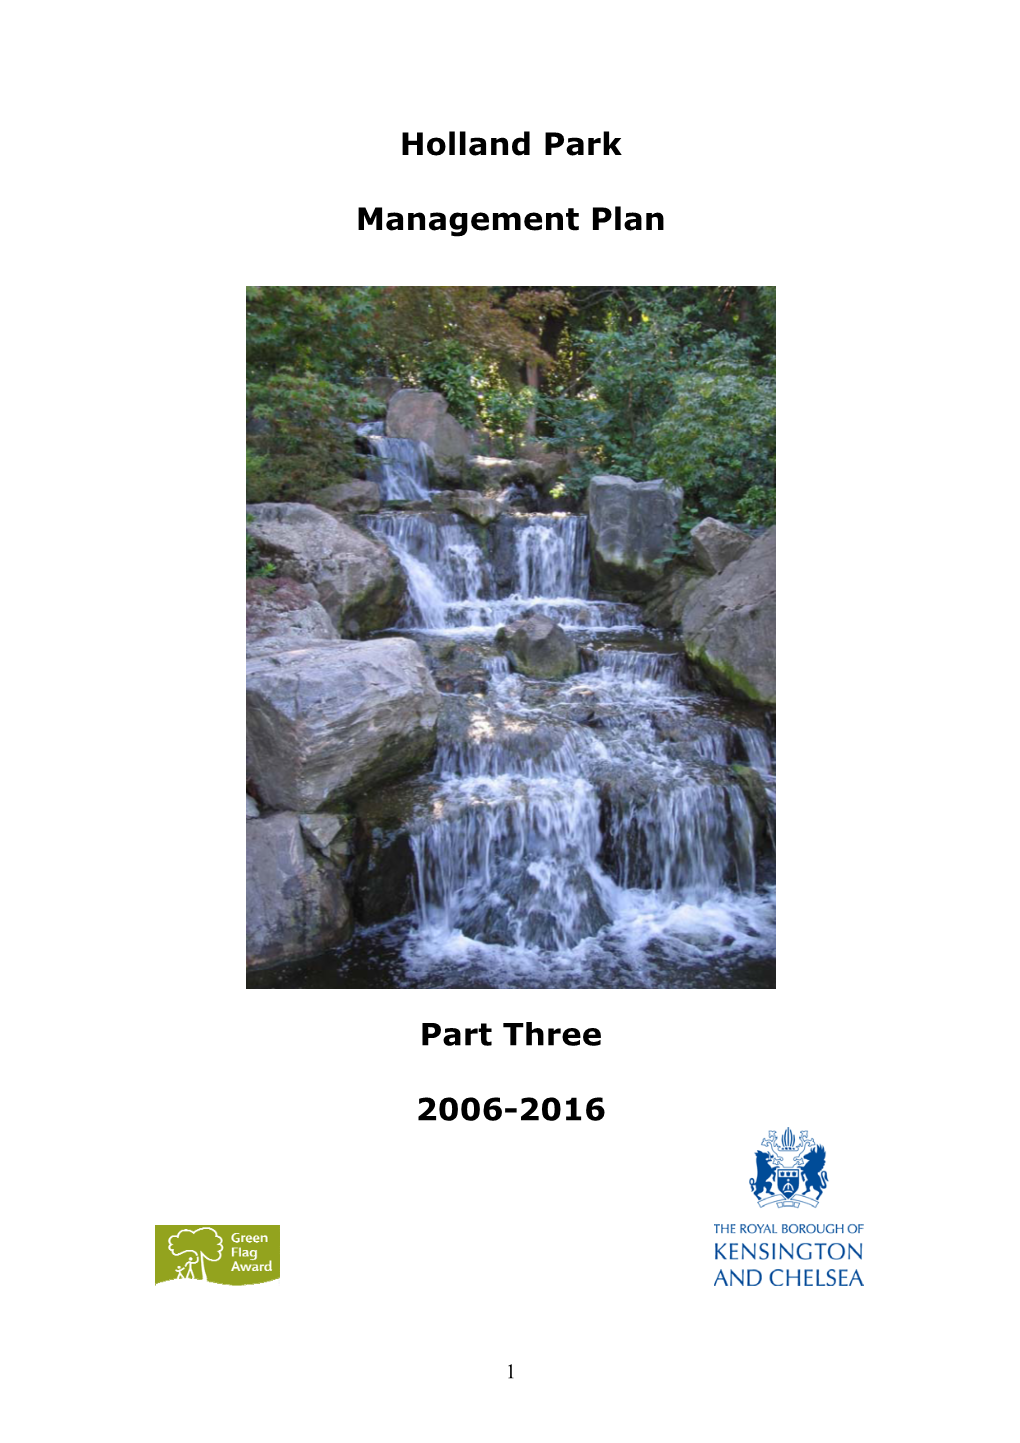 Holland Park Management Plan Part Three 2006-2016